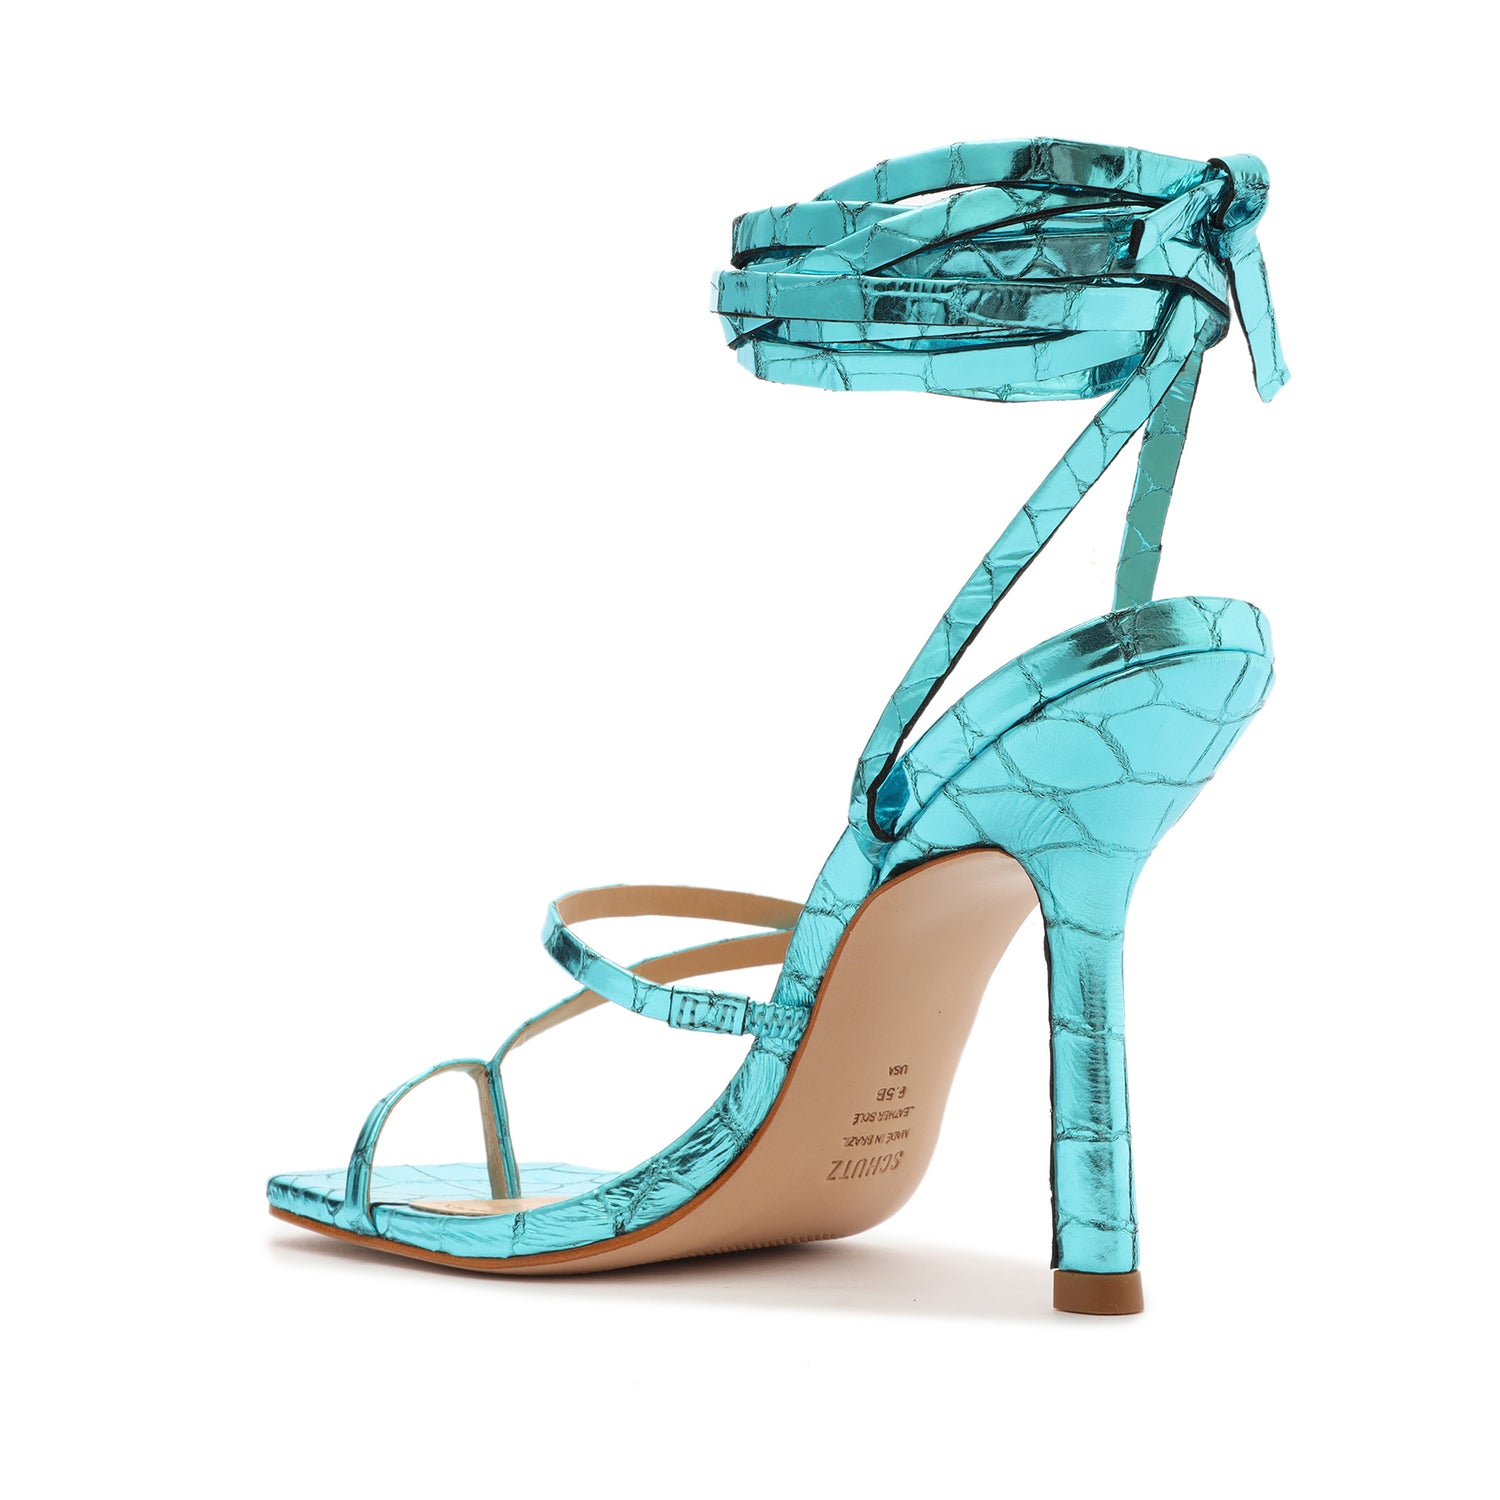 London Turquoise Thigh High Heels | KURVE STYLE LLC